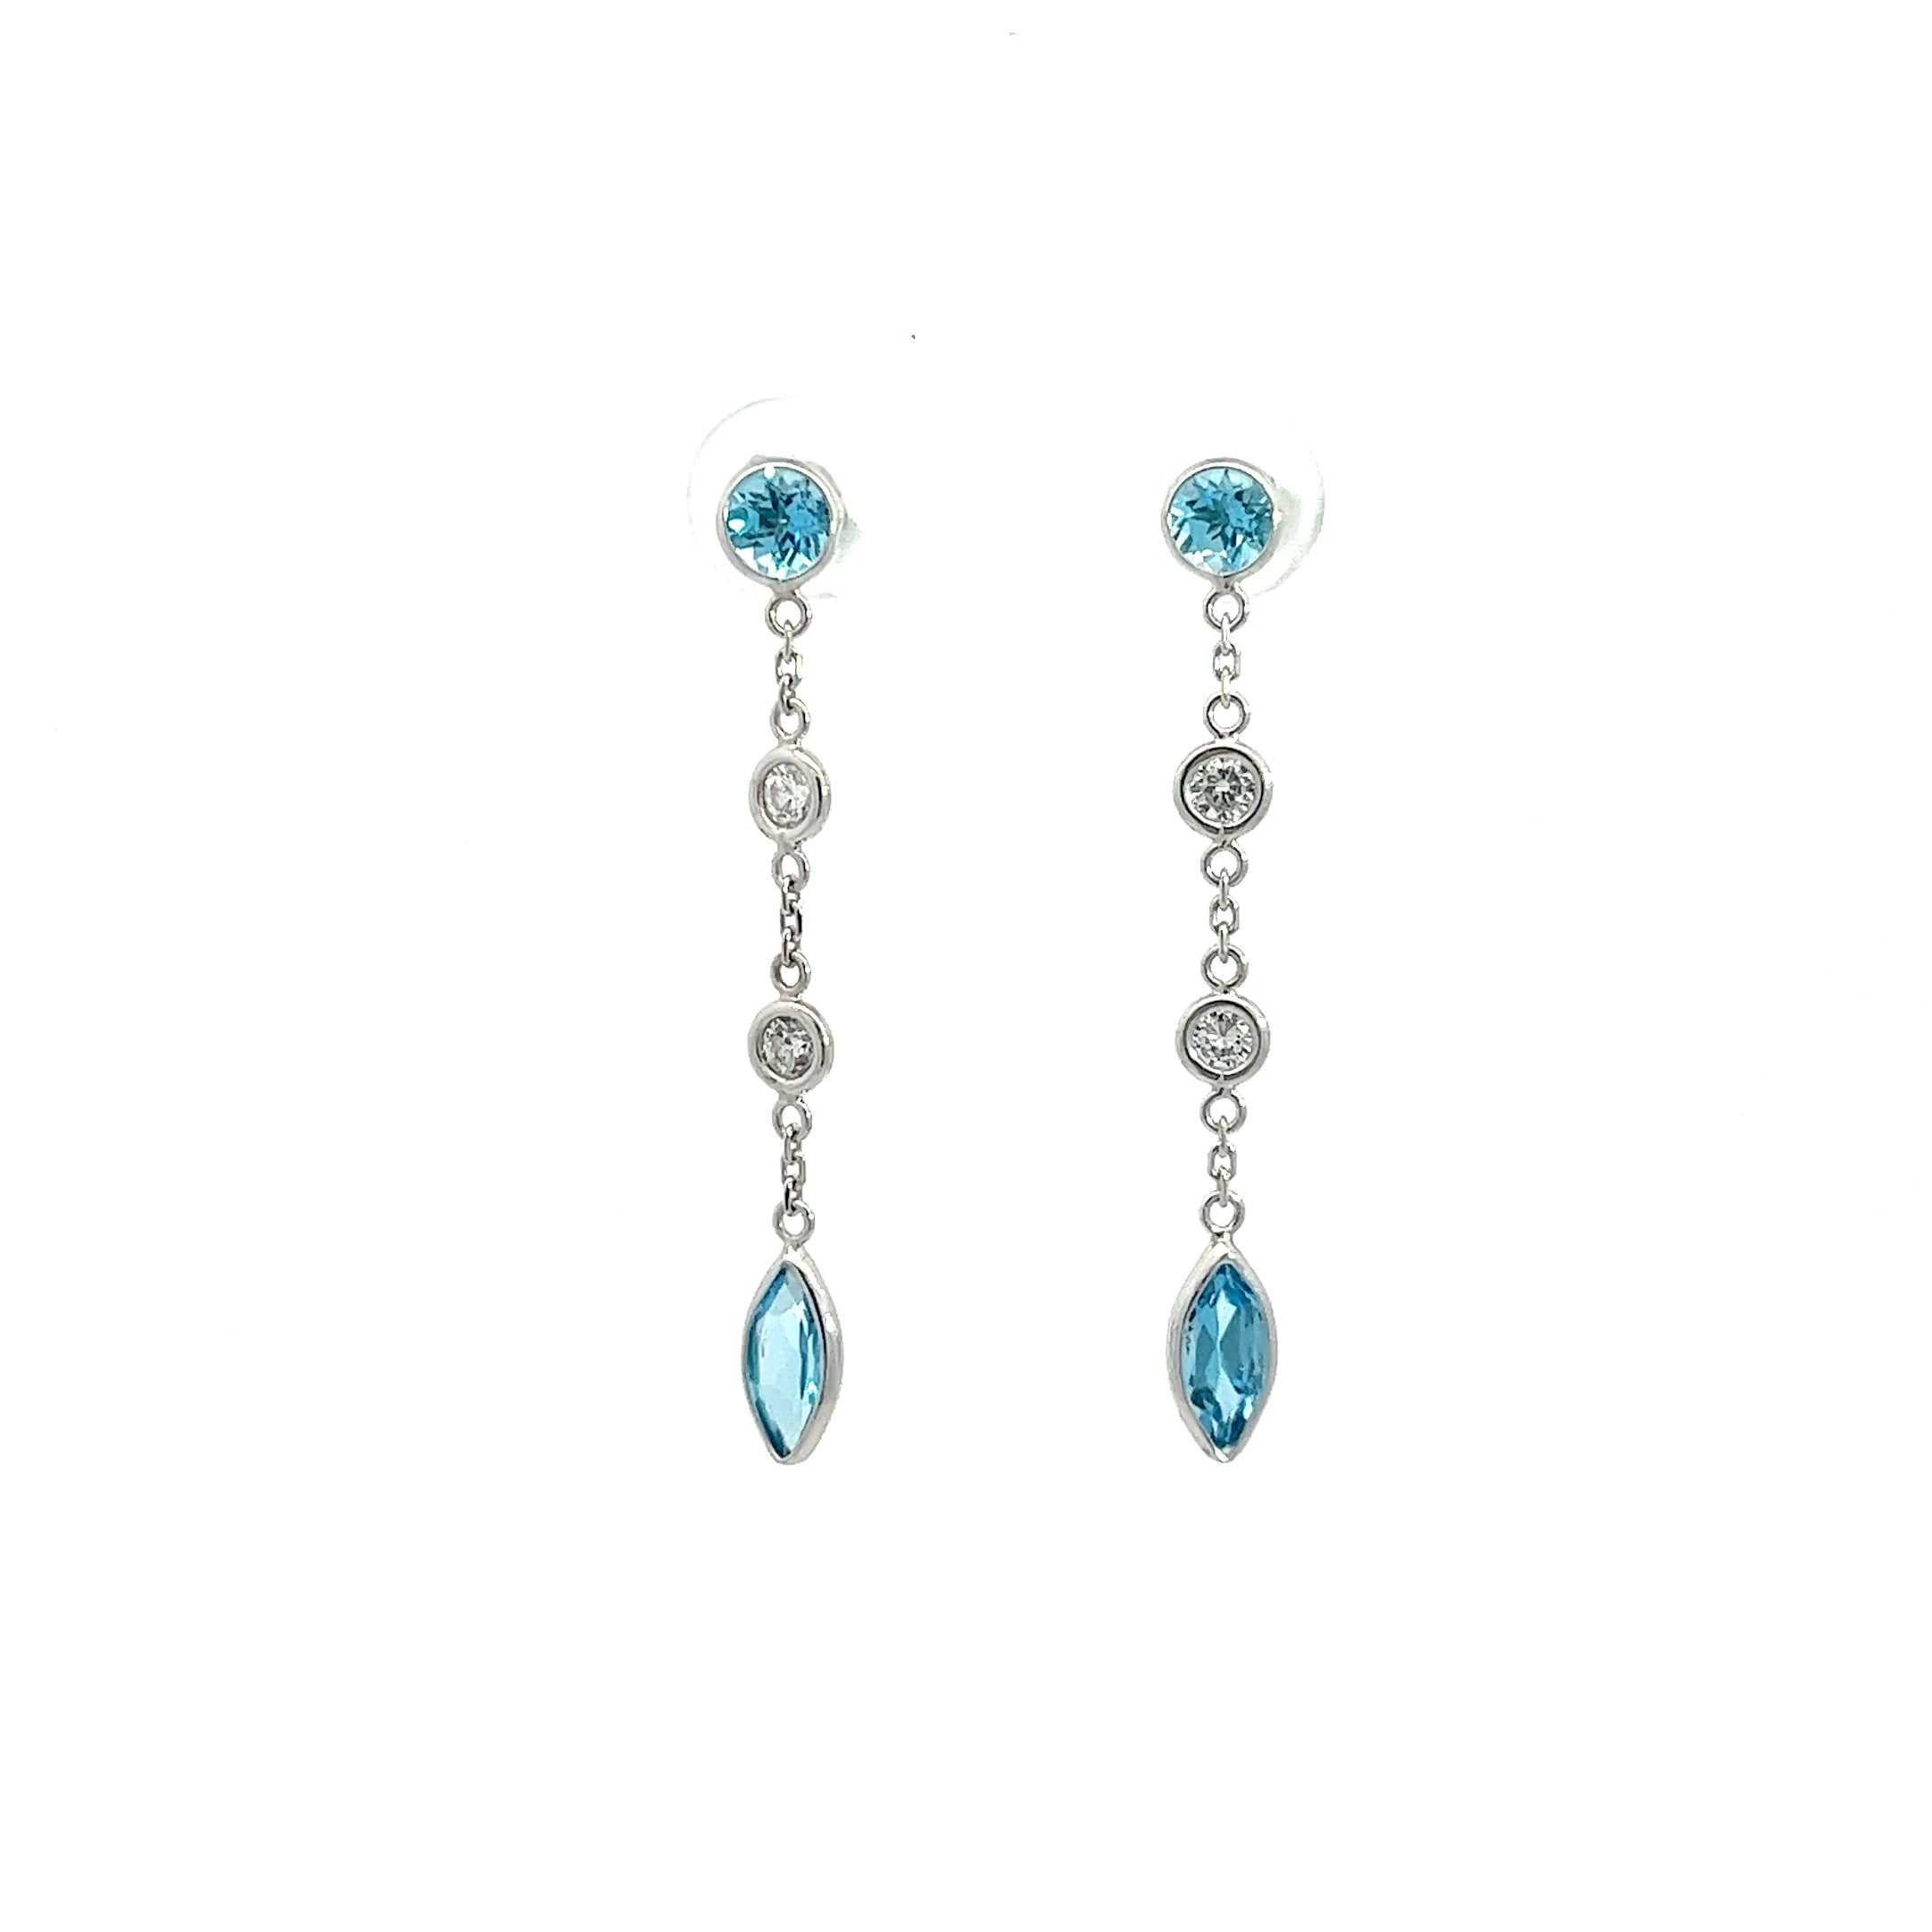 Blue topaz earrings with diamonds__2023-06-24-11-07-41-2.jpg